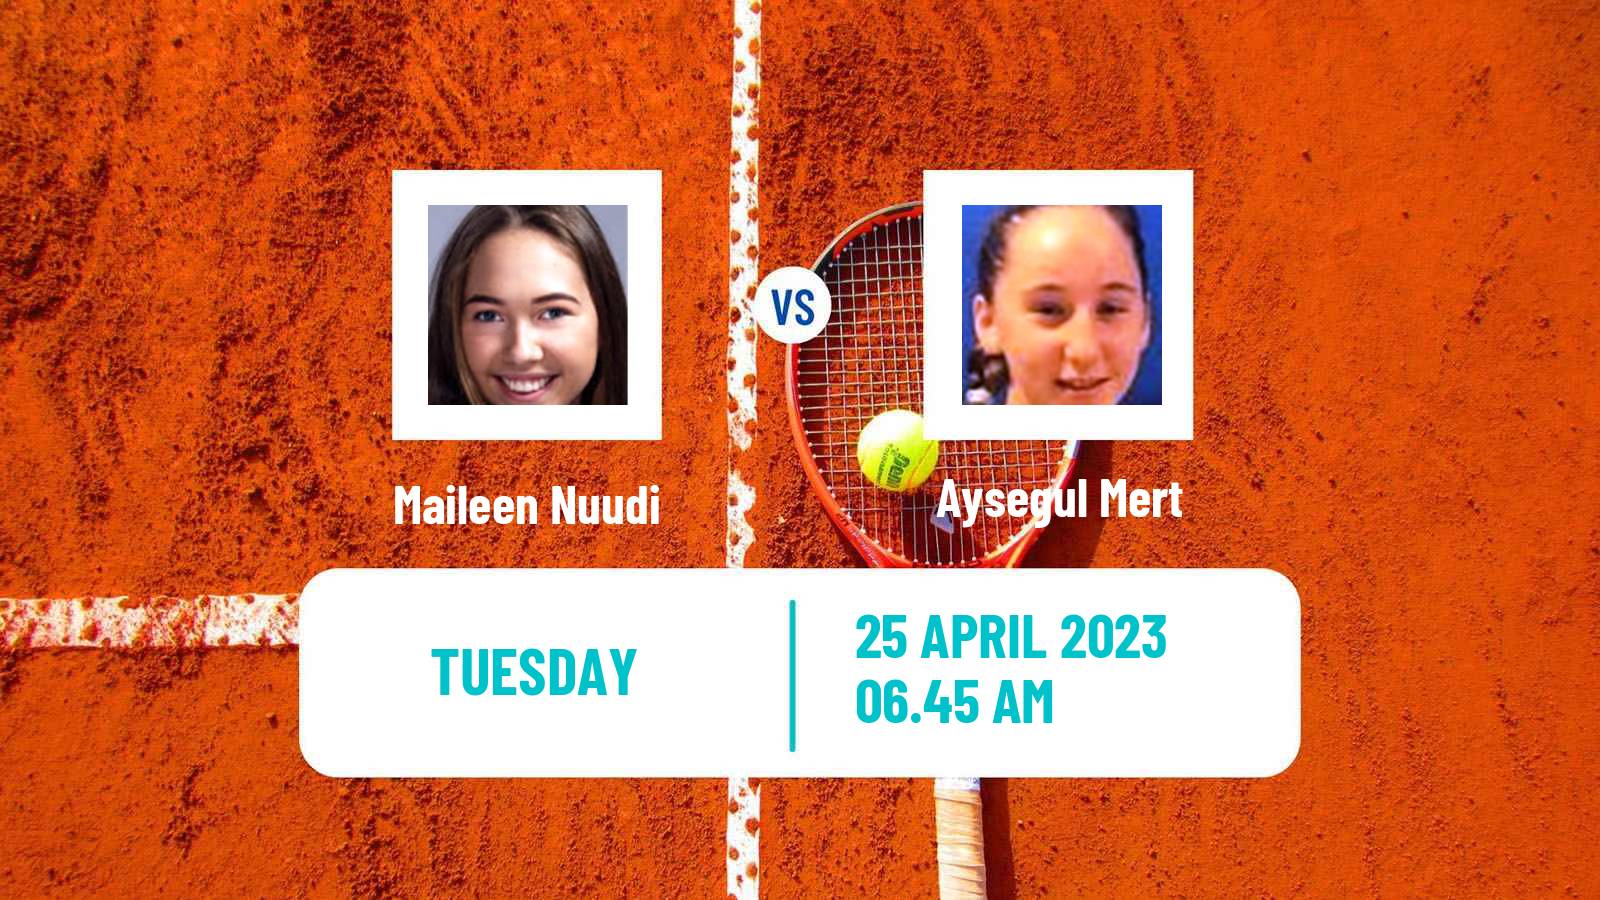 Tennis ITF Tournaments Maileen Nuudi - Aysegul Mert